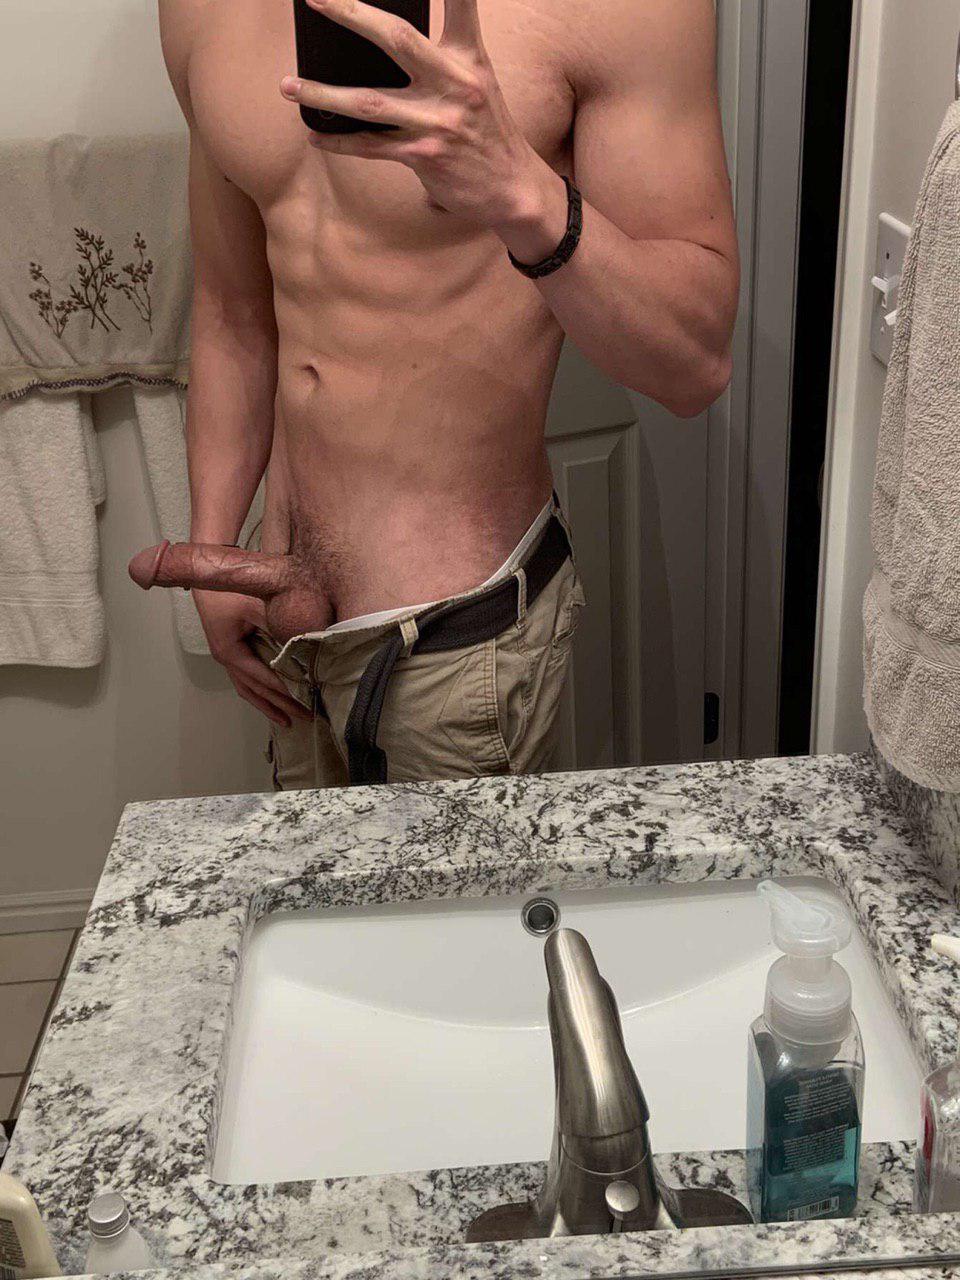 straight guys naked mirror selfies